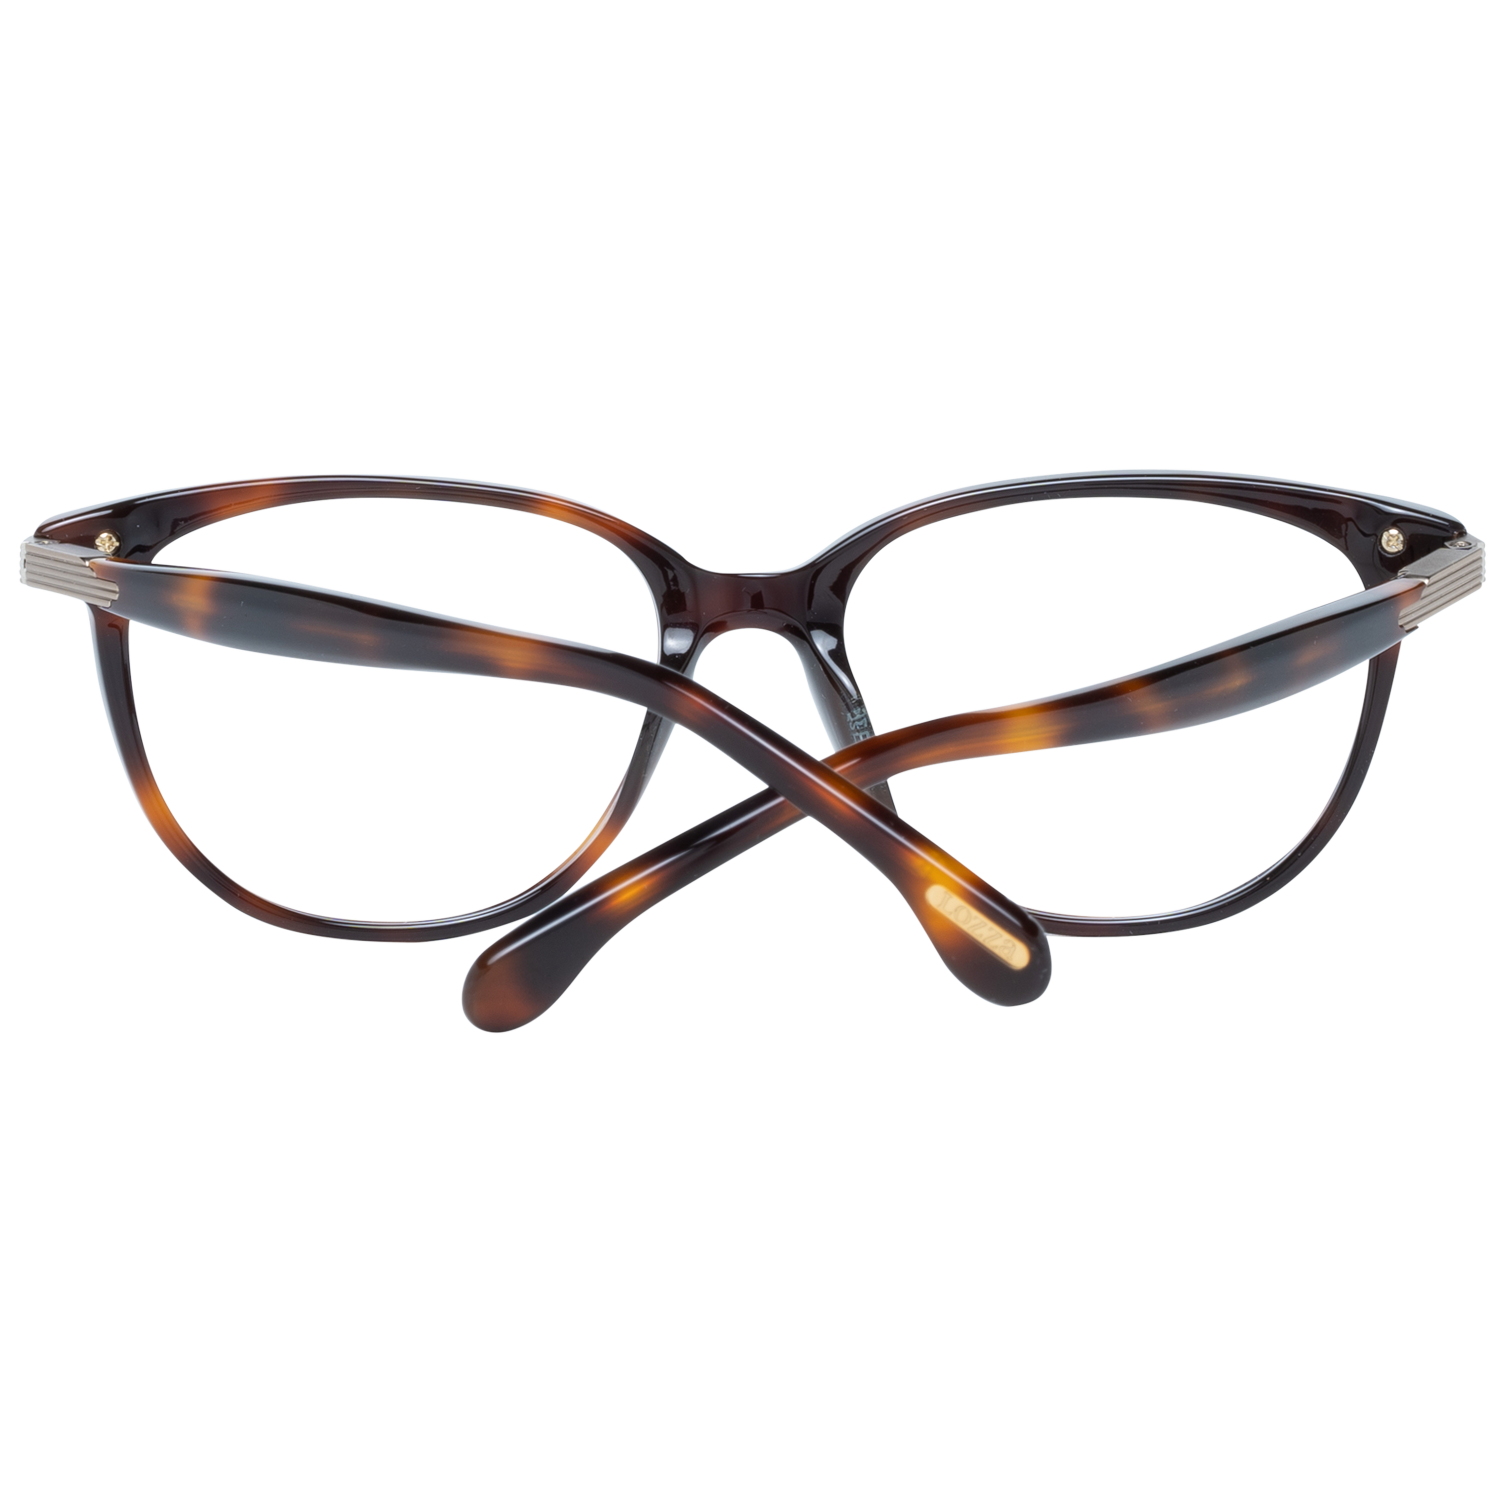 Lozza Frames Lozza Optical Frame VL4107 09AJ 52 Eyeglasses Eyewear UK USA Australia 